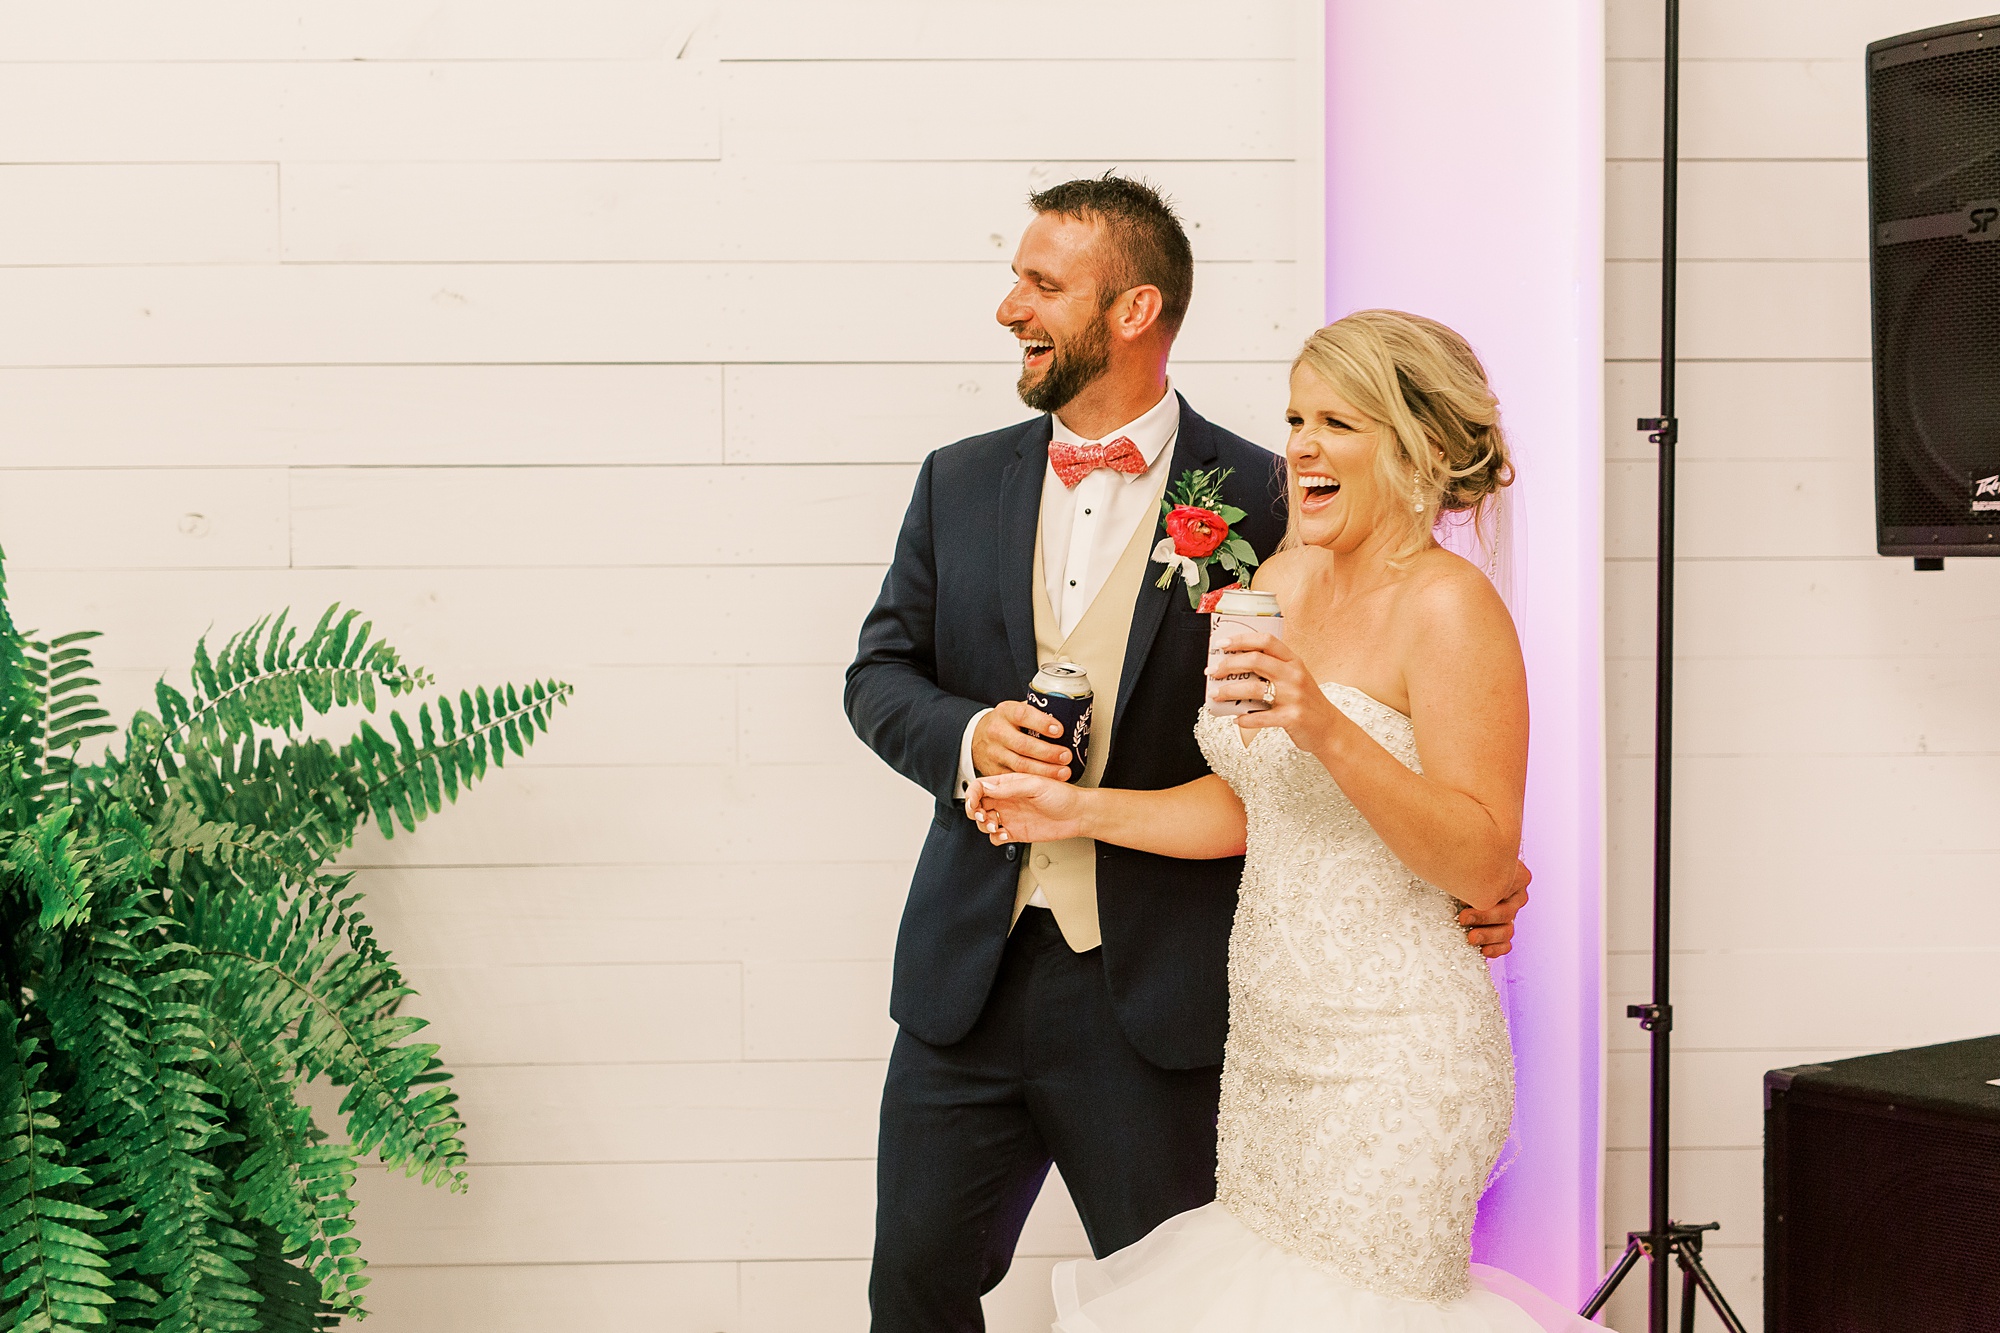 newlyweds react to wedding toasts during wedding reception